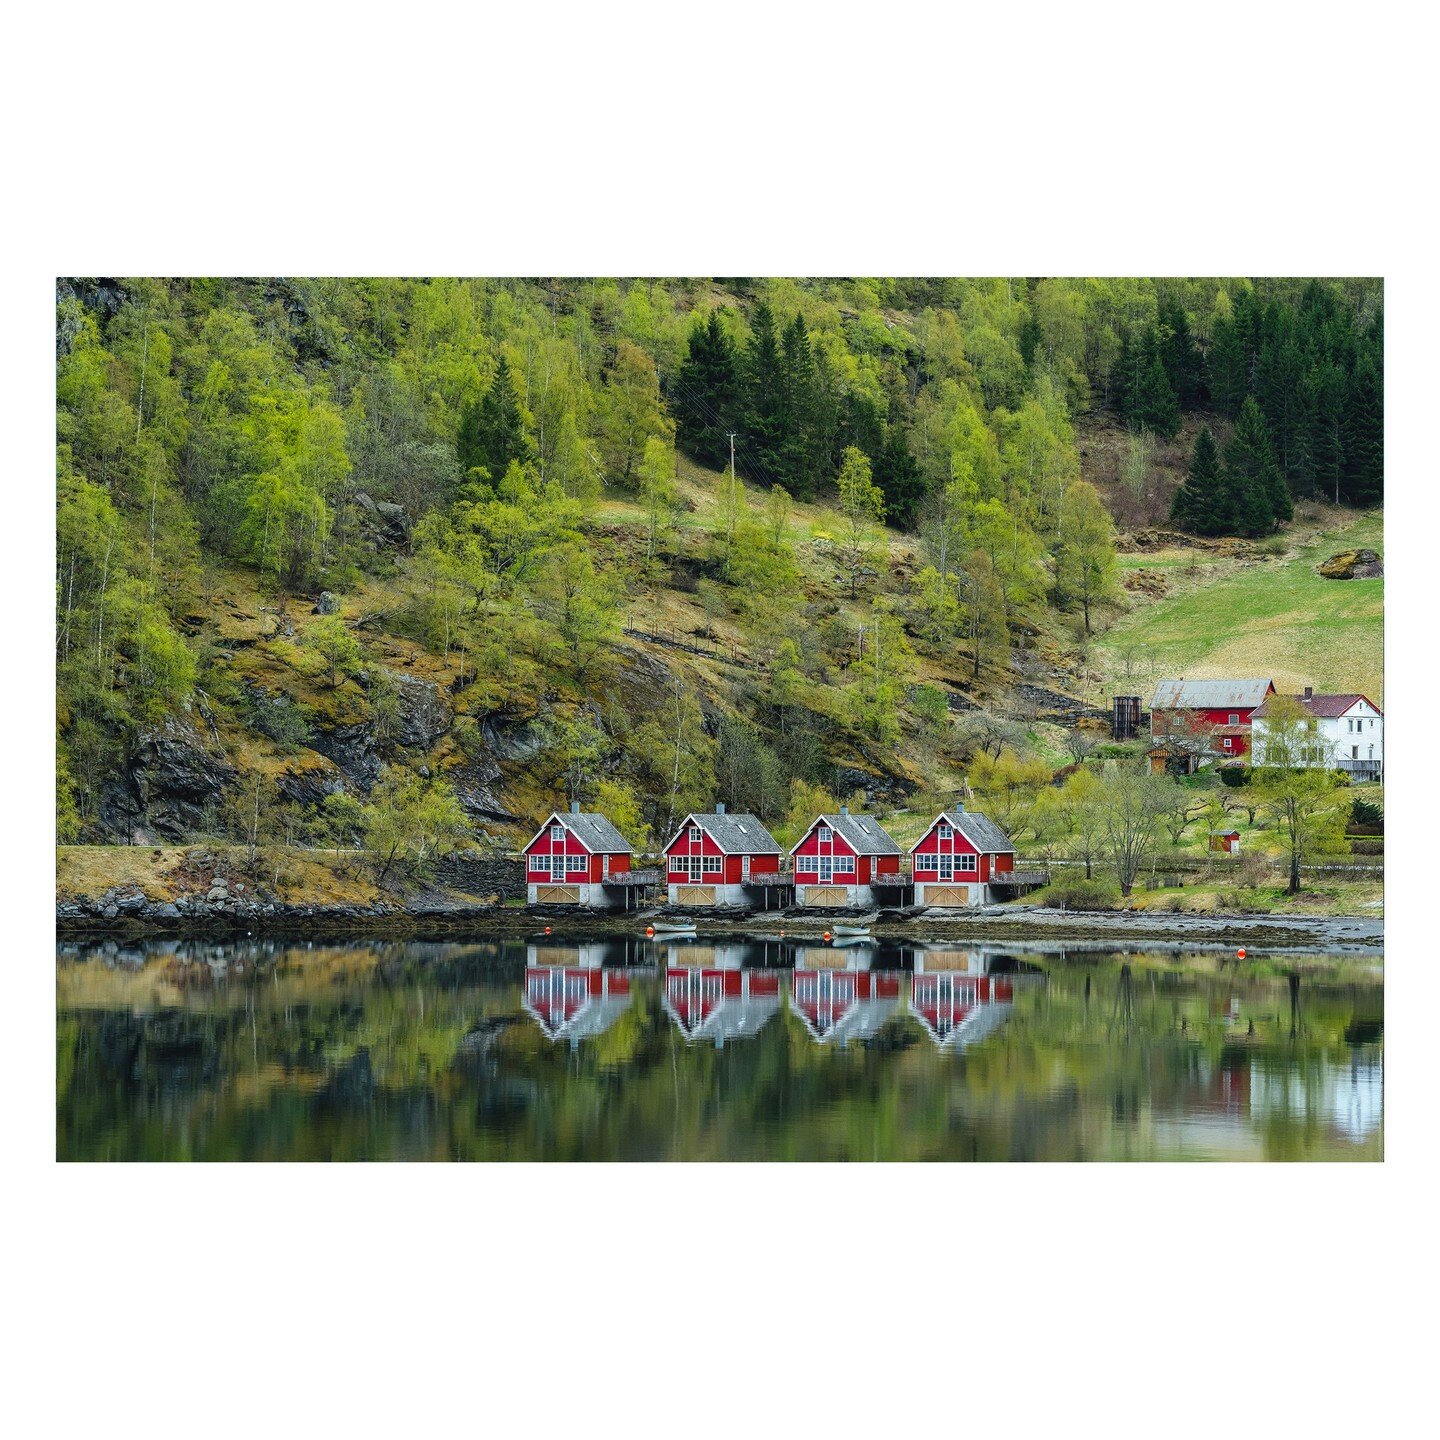 Four little boat houses - Fl&aring;m, Norway
.
.
.
.
.
@flamsbrygga.no #flamsbrygga #n&aelig;r&oslash;yfjorden #norway #visitnorway #visitsognefjord #fjordnorway #fjords #flam #norge #bestofnorway #worldheritage #nature #picoftheday #landscapesofnorw